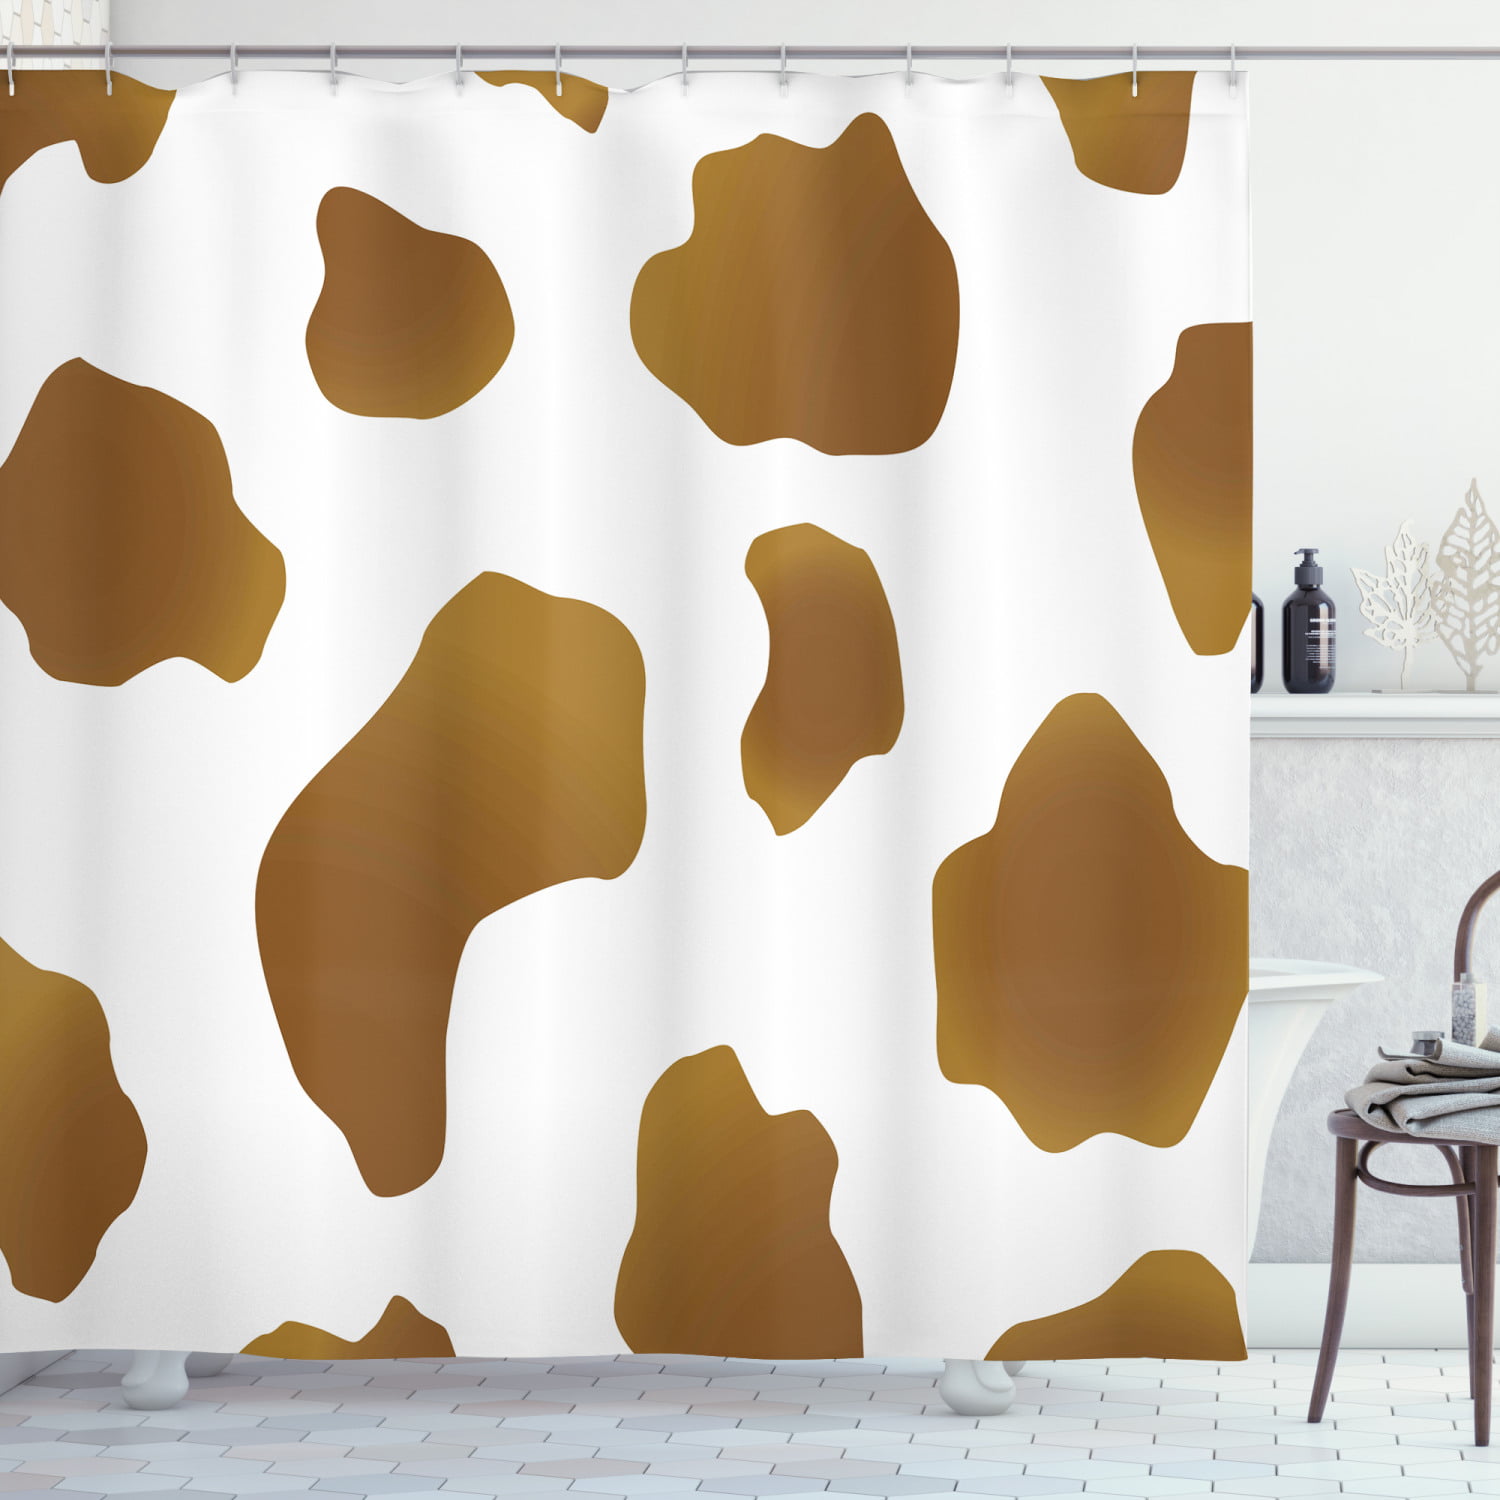 Details about   Vintage Brown White Cow Spots Pattern Fabric Shower Curtain Set Bathroom Decor 